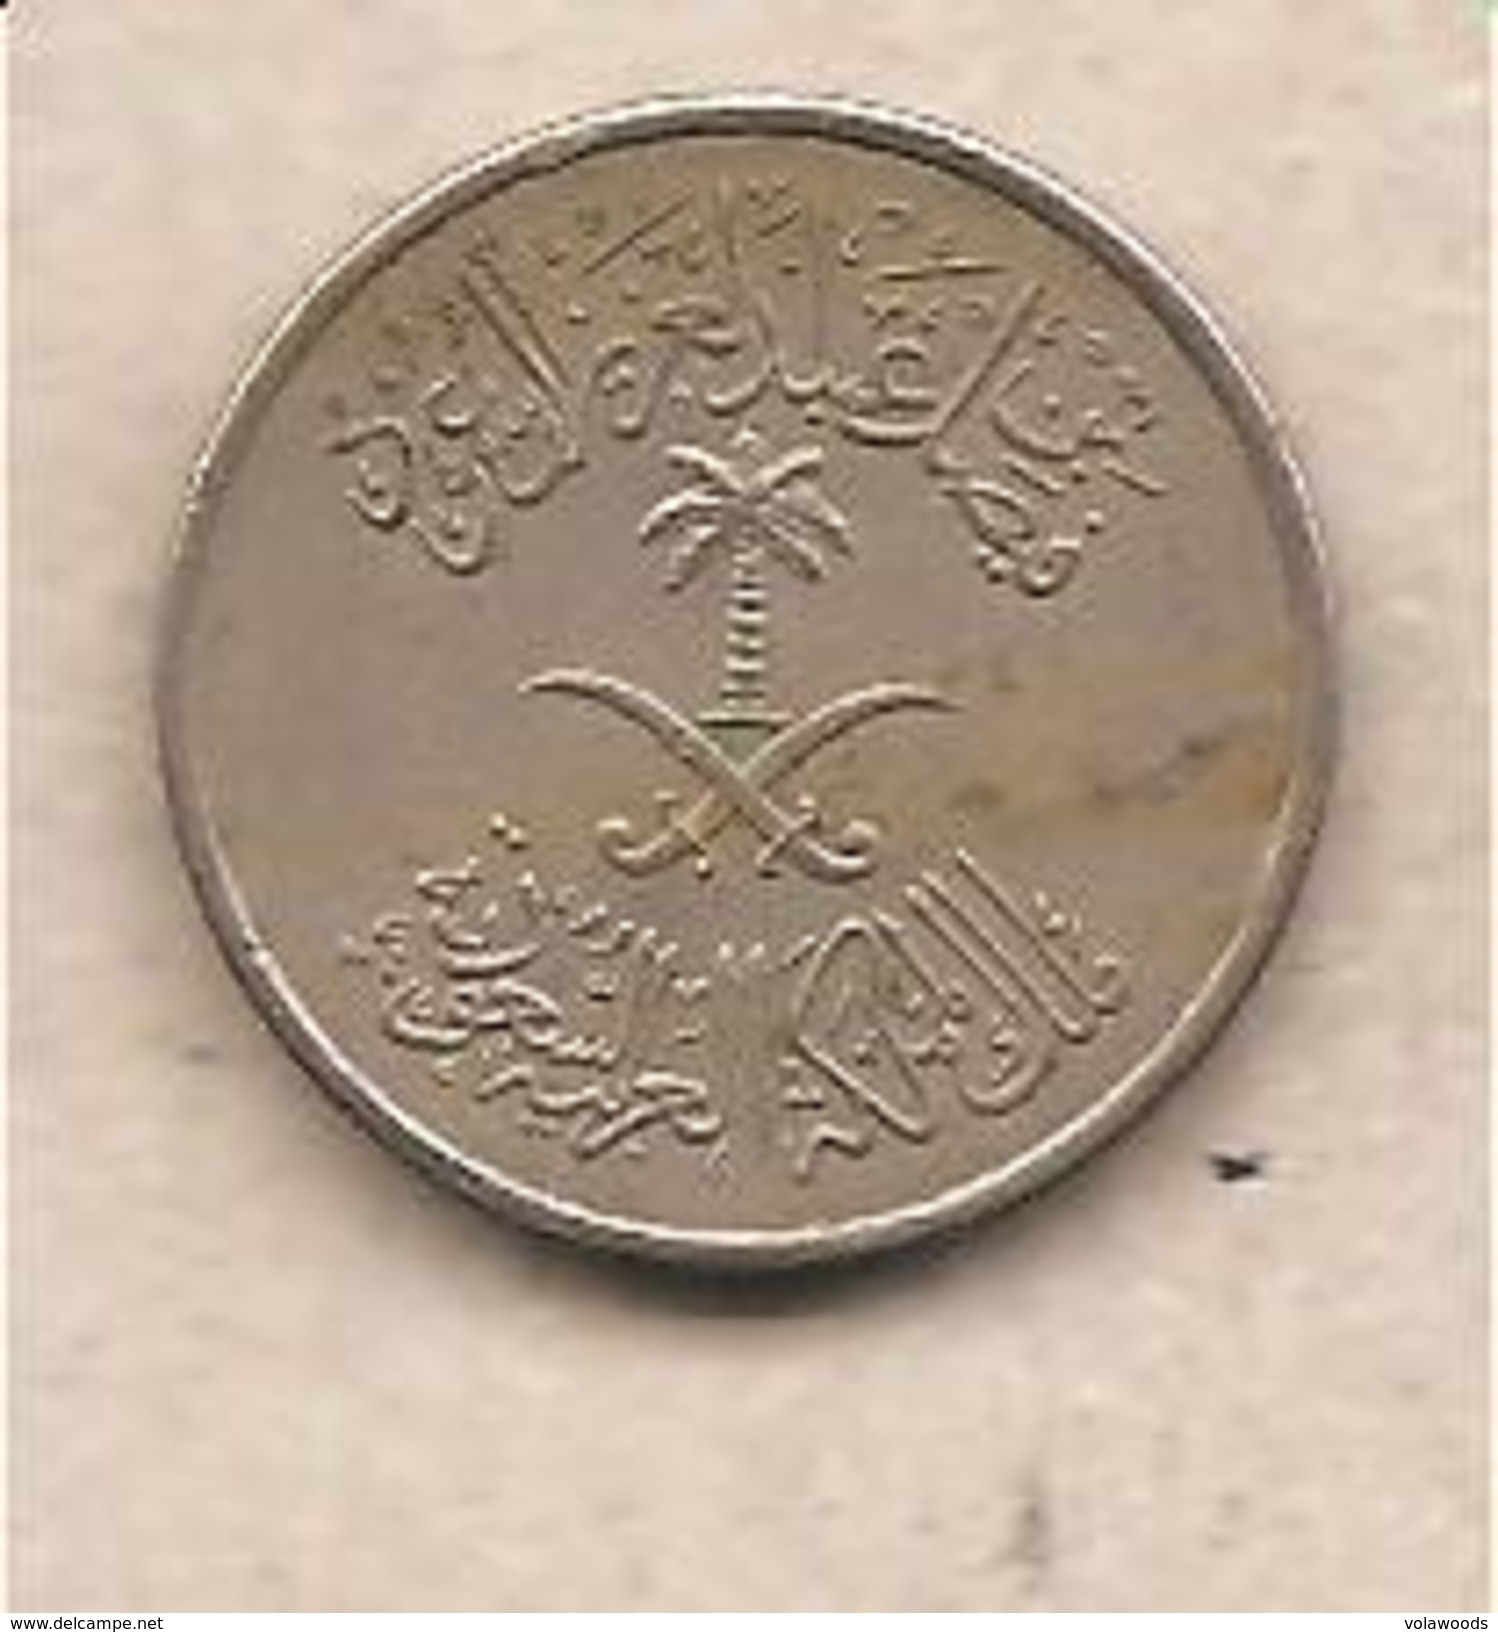 Arabia Saudita - Moneta Circolata Da 10 Halala - 1972 - Arabia Saudita